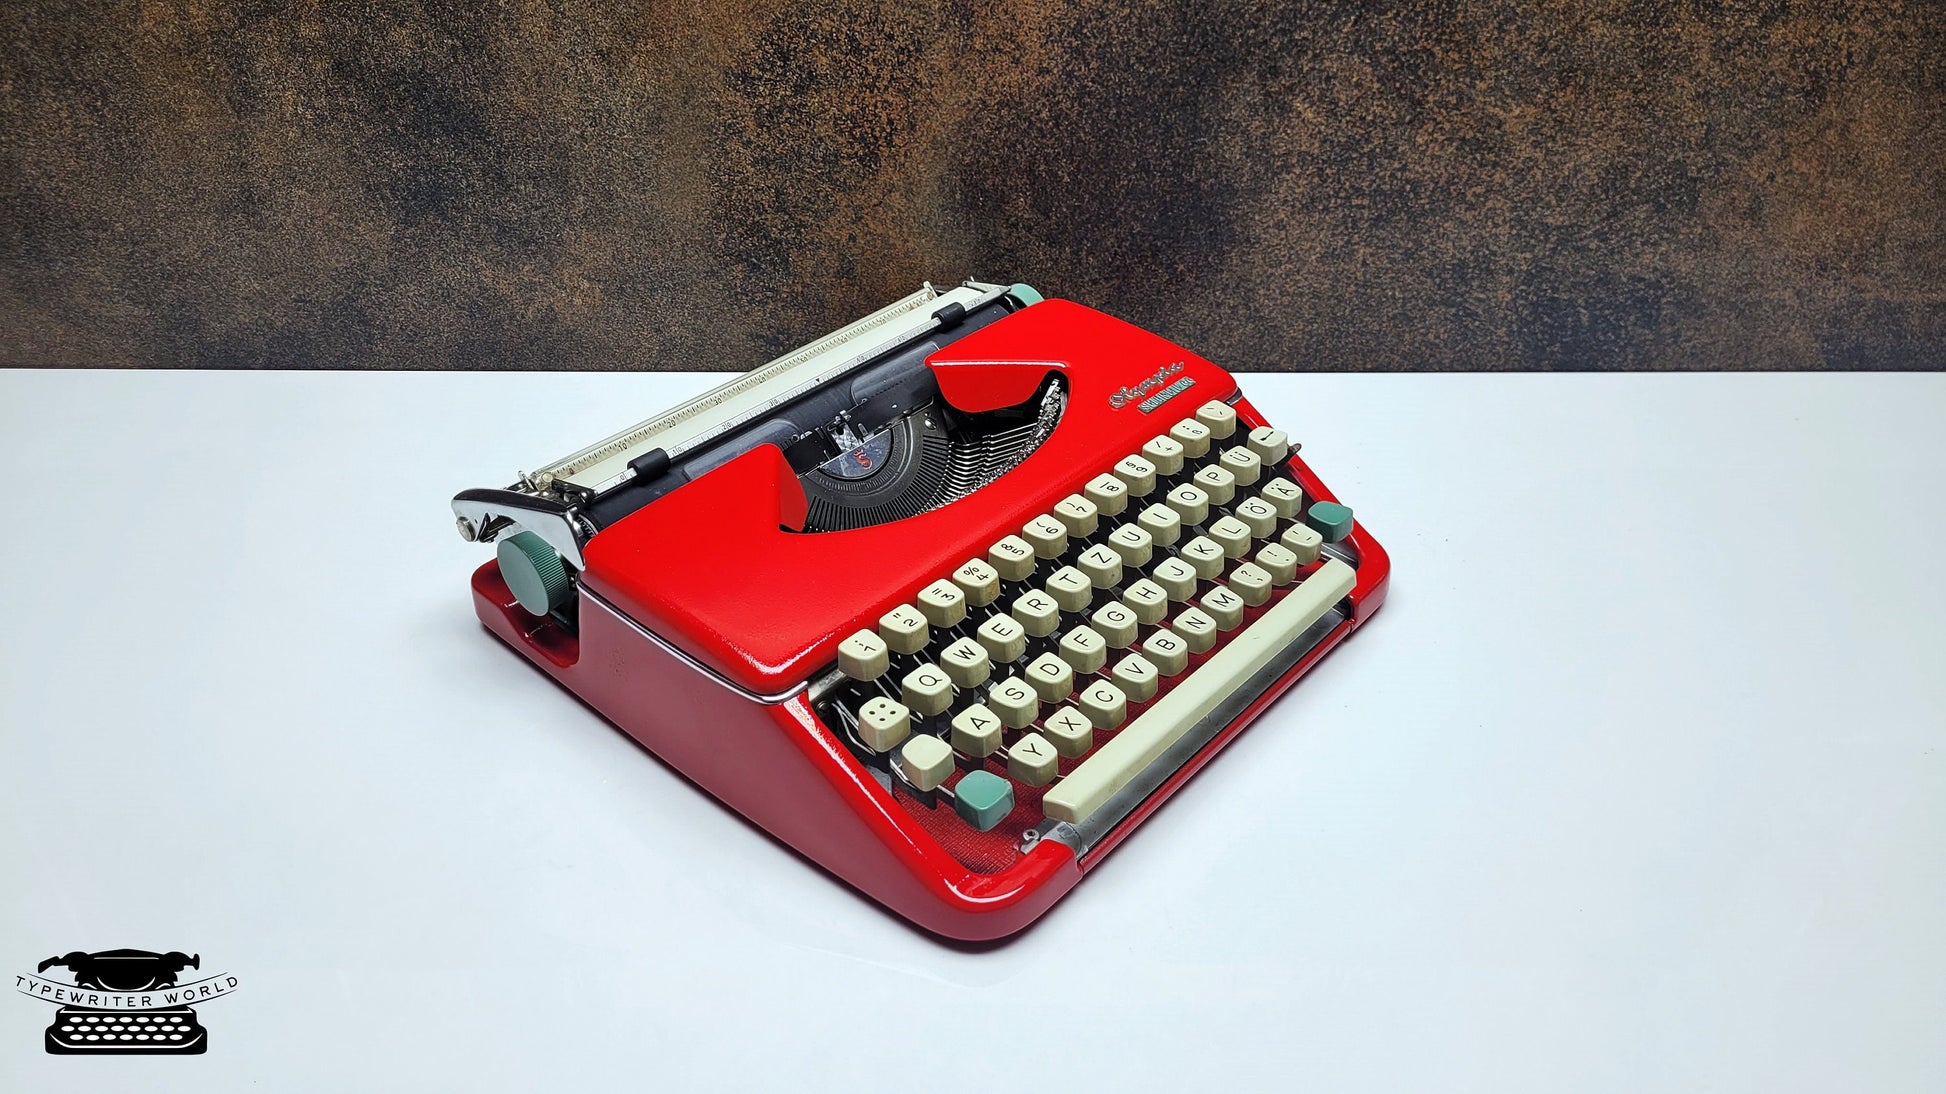 Vintage Olympia Splendid 33/66 Red Typewriter -